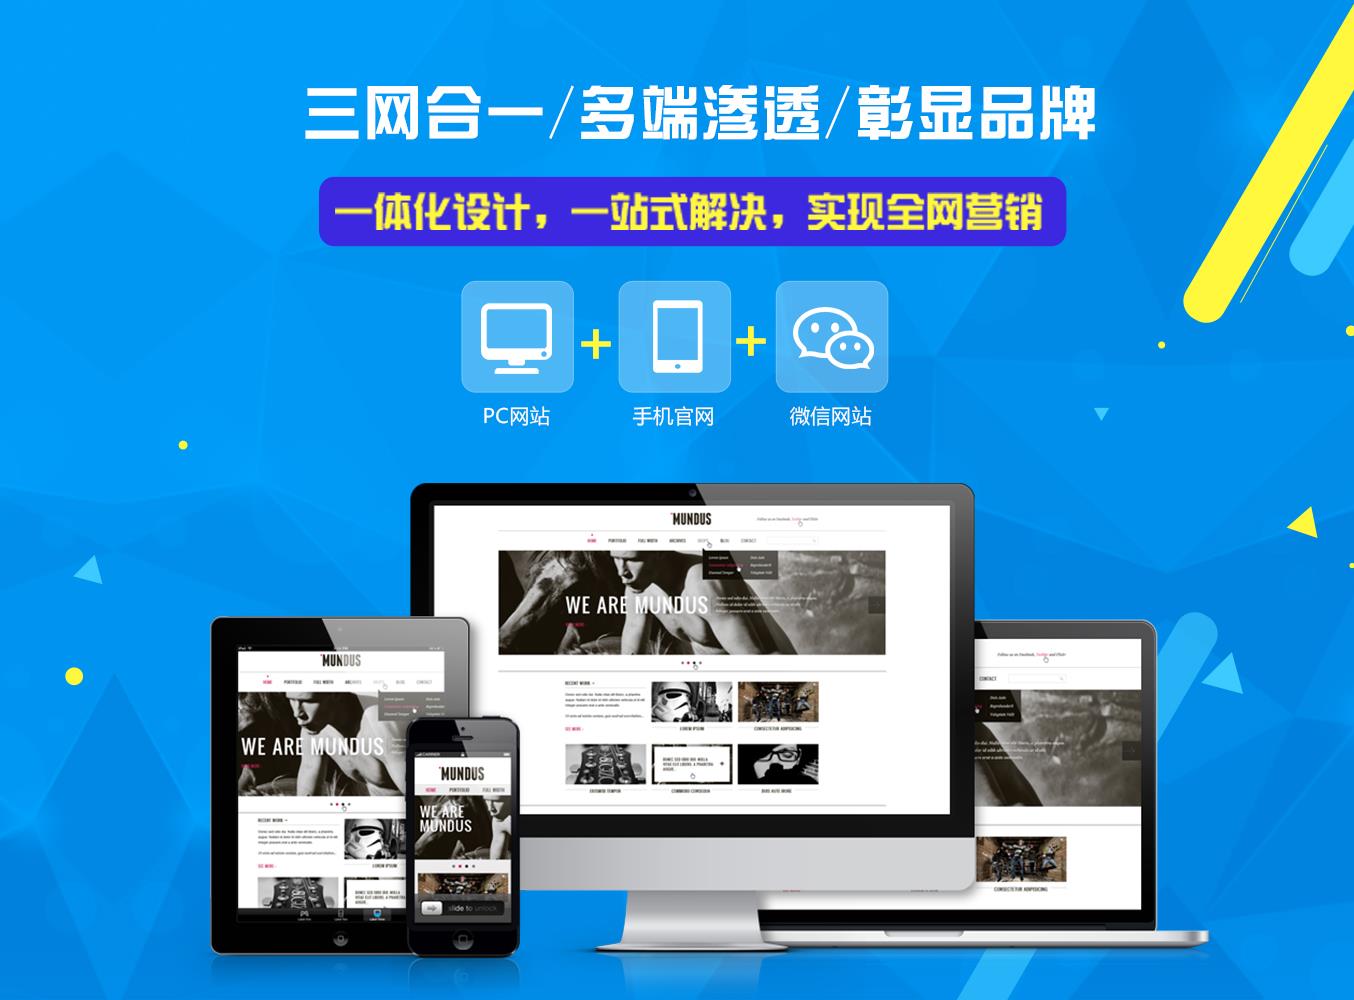 Bwin必赢香港“一带一块”资讯网站启动冀搭修平台集聚商机